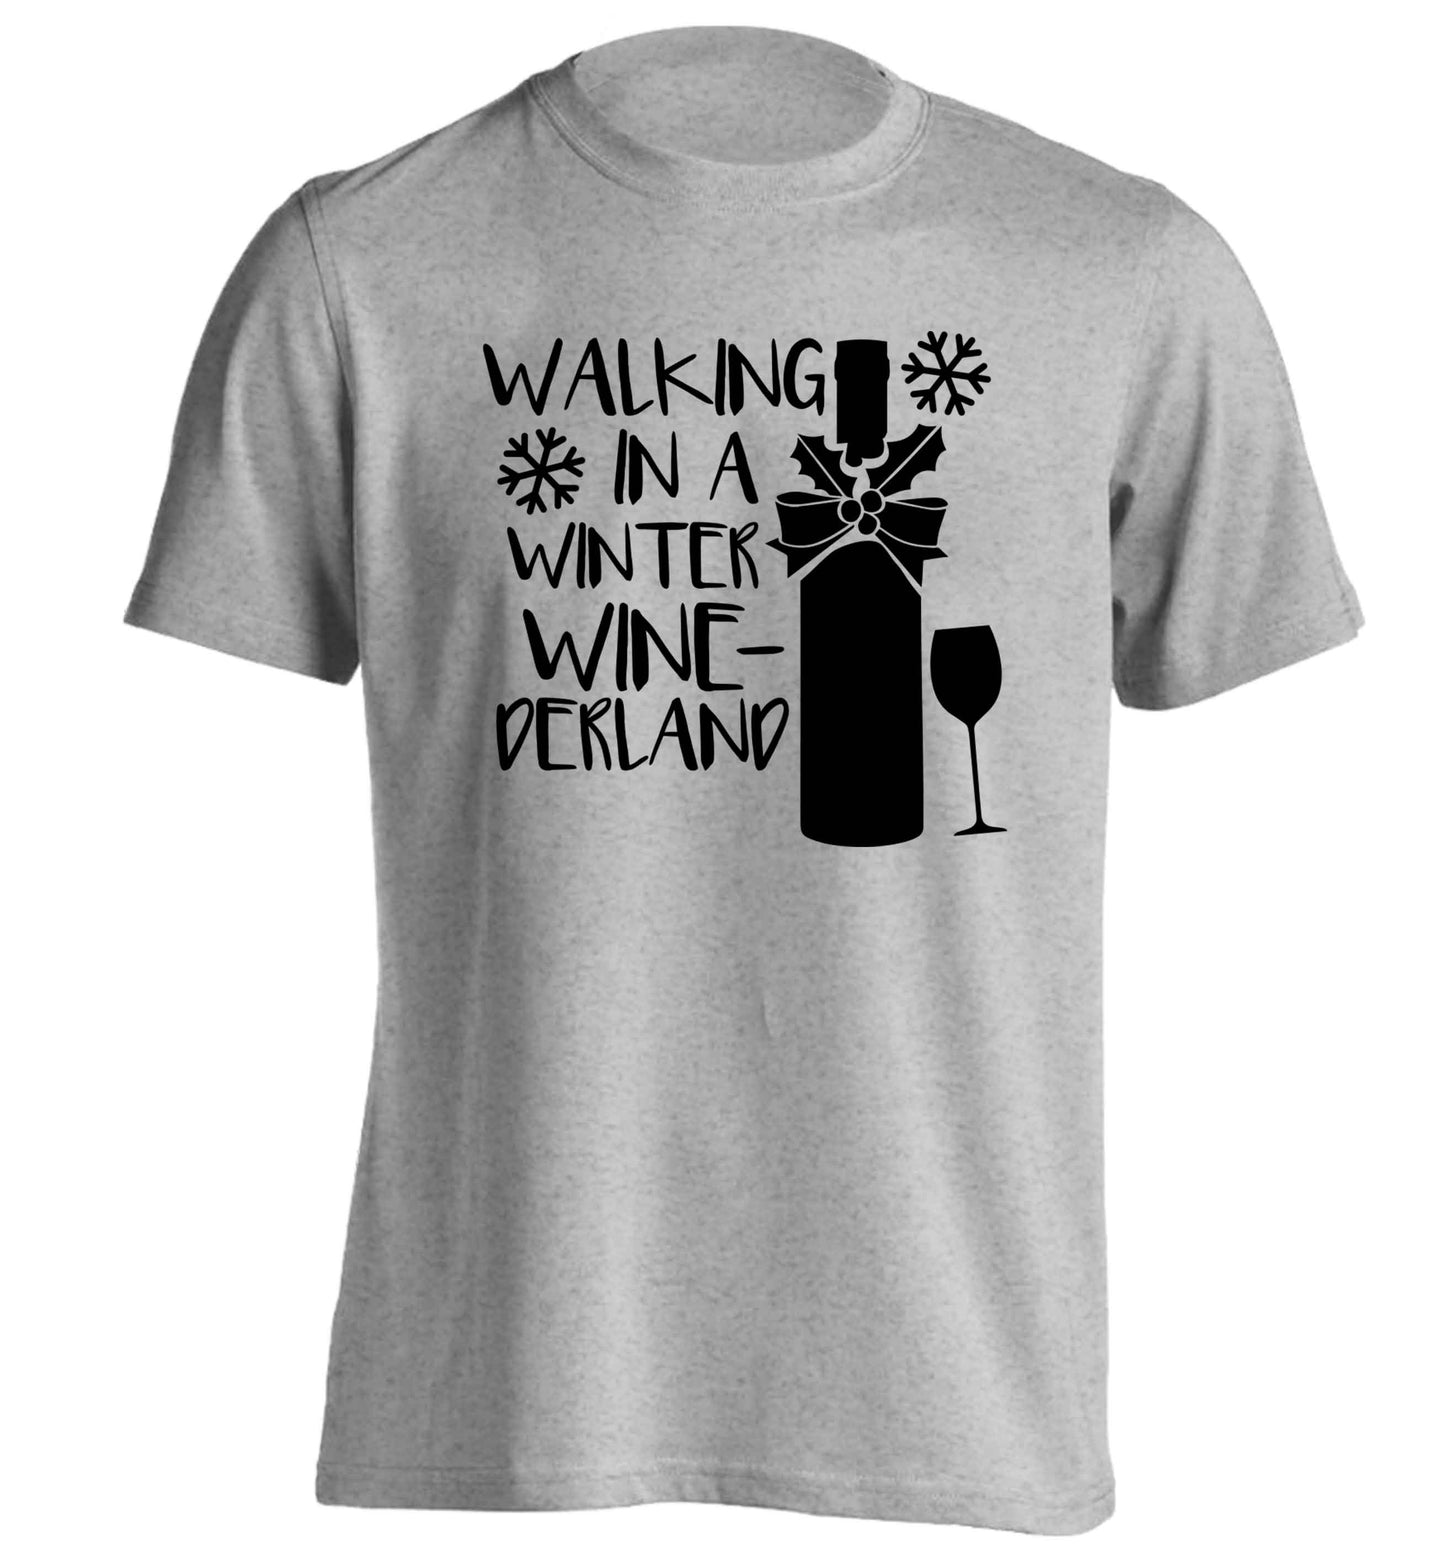 Walking in a wine-derwonderland adults unisex grey Tshirt 2XL